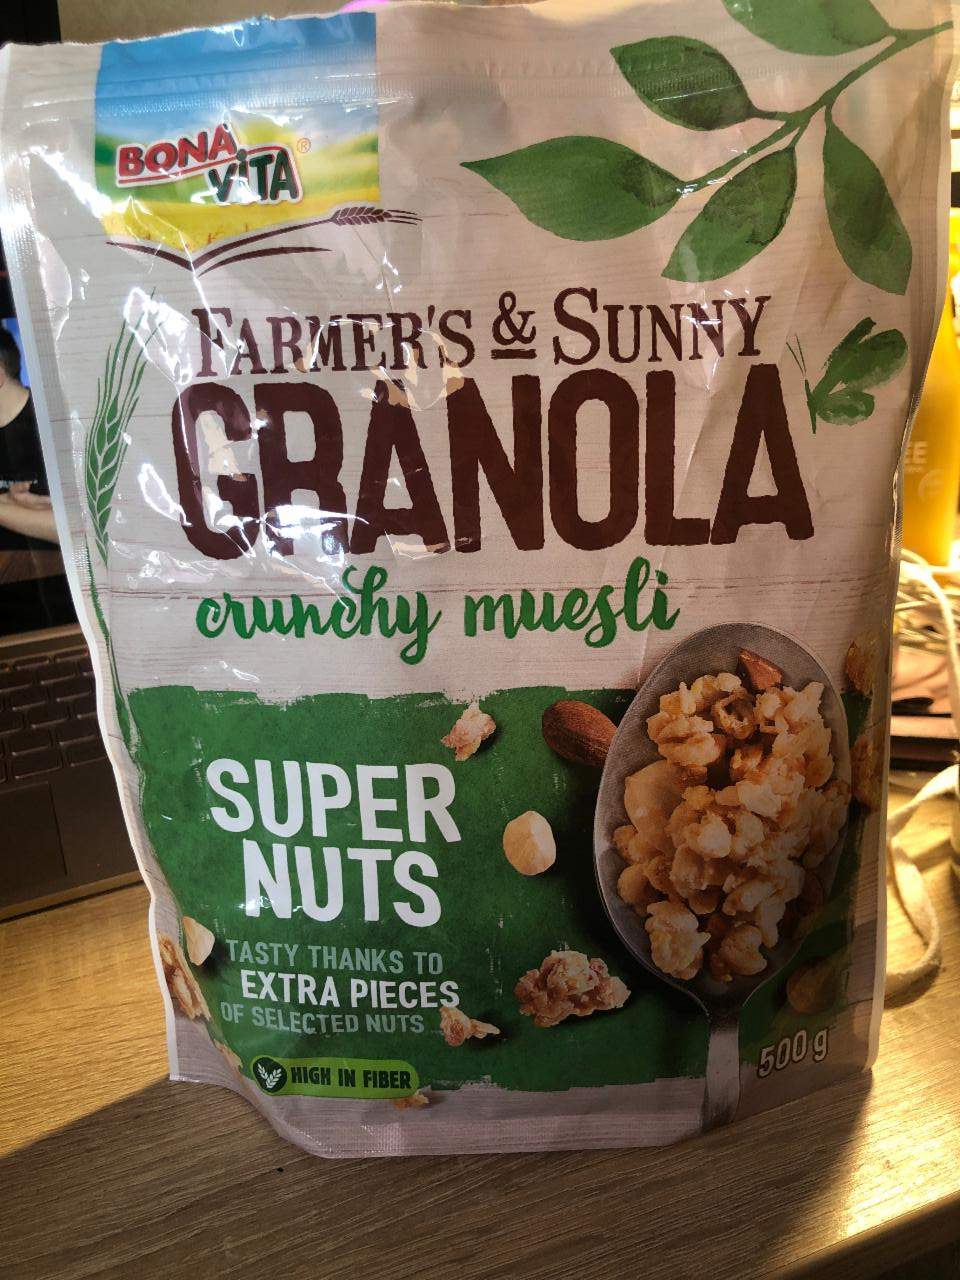 Képek - Granola super nuts Bonavita